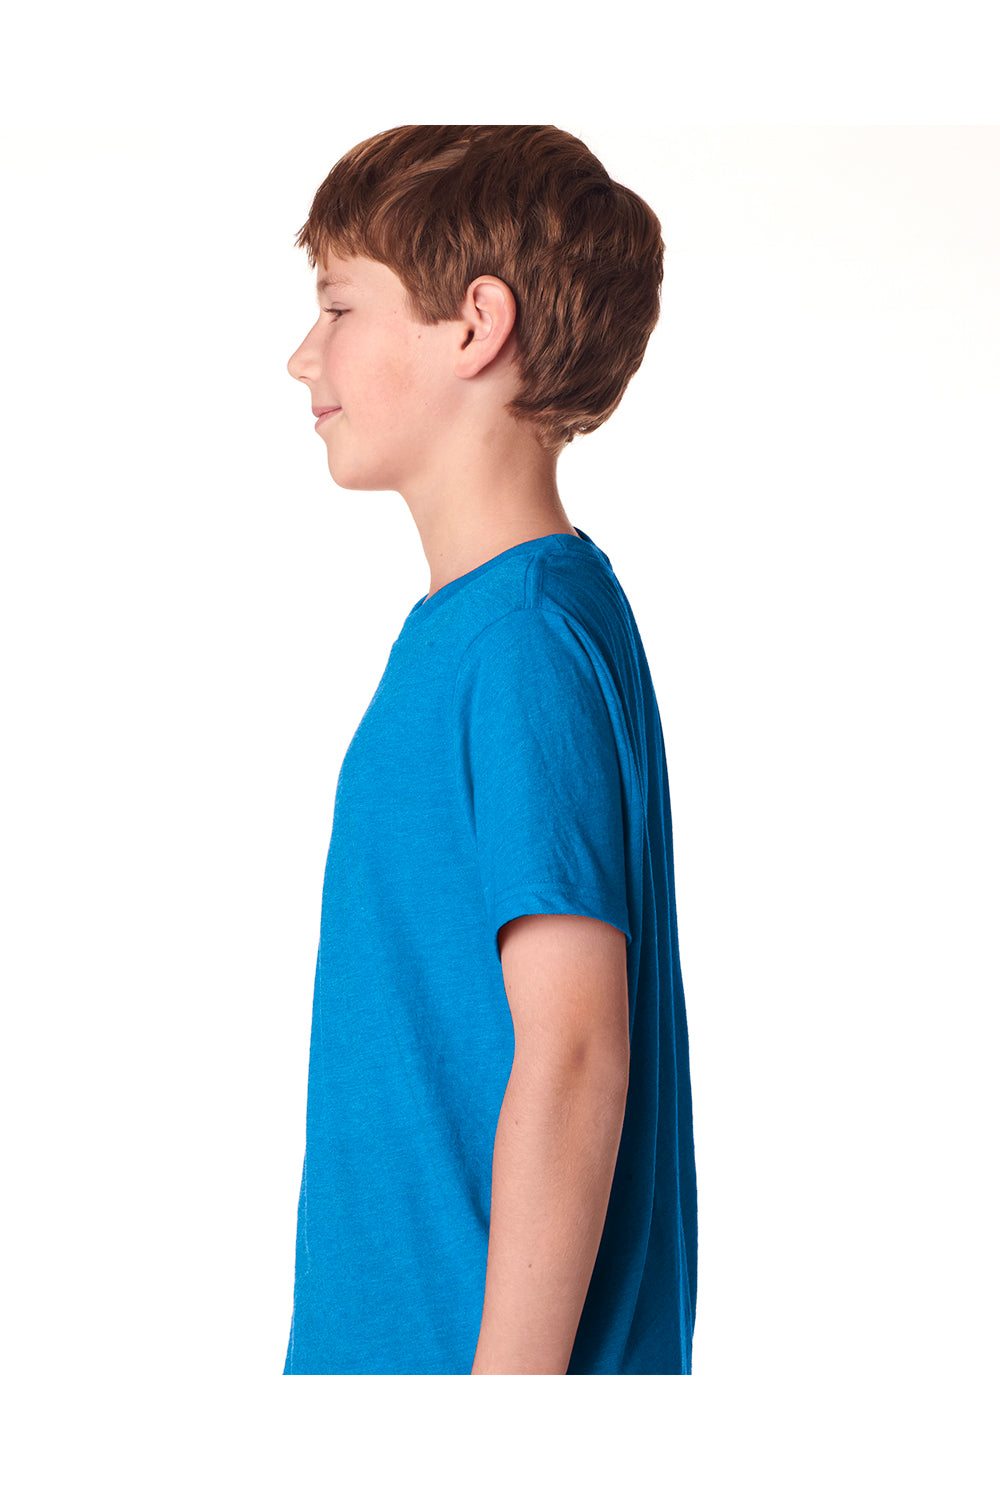 Next Level N6310 Youth Jersey Short Sleeve Crewneck T-Shirt Turquoise Blue Side